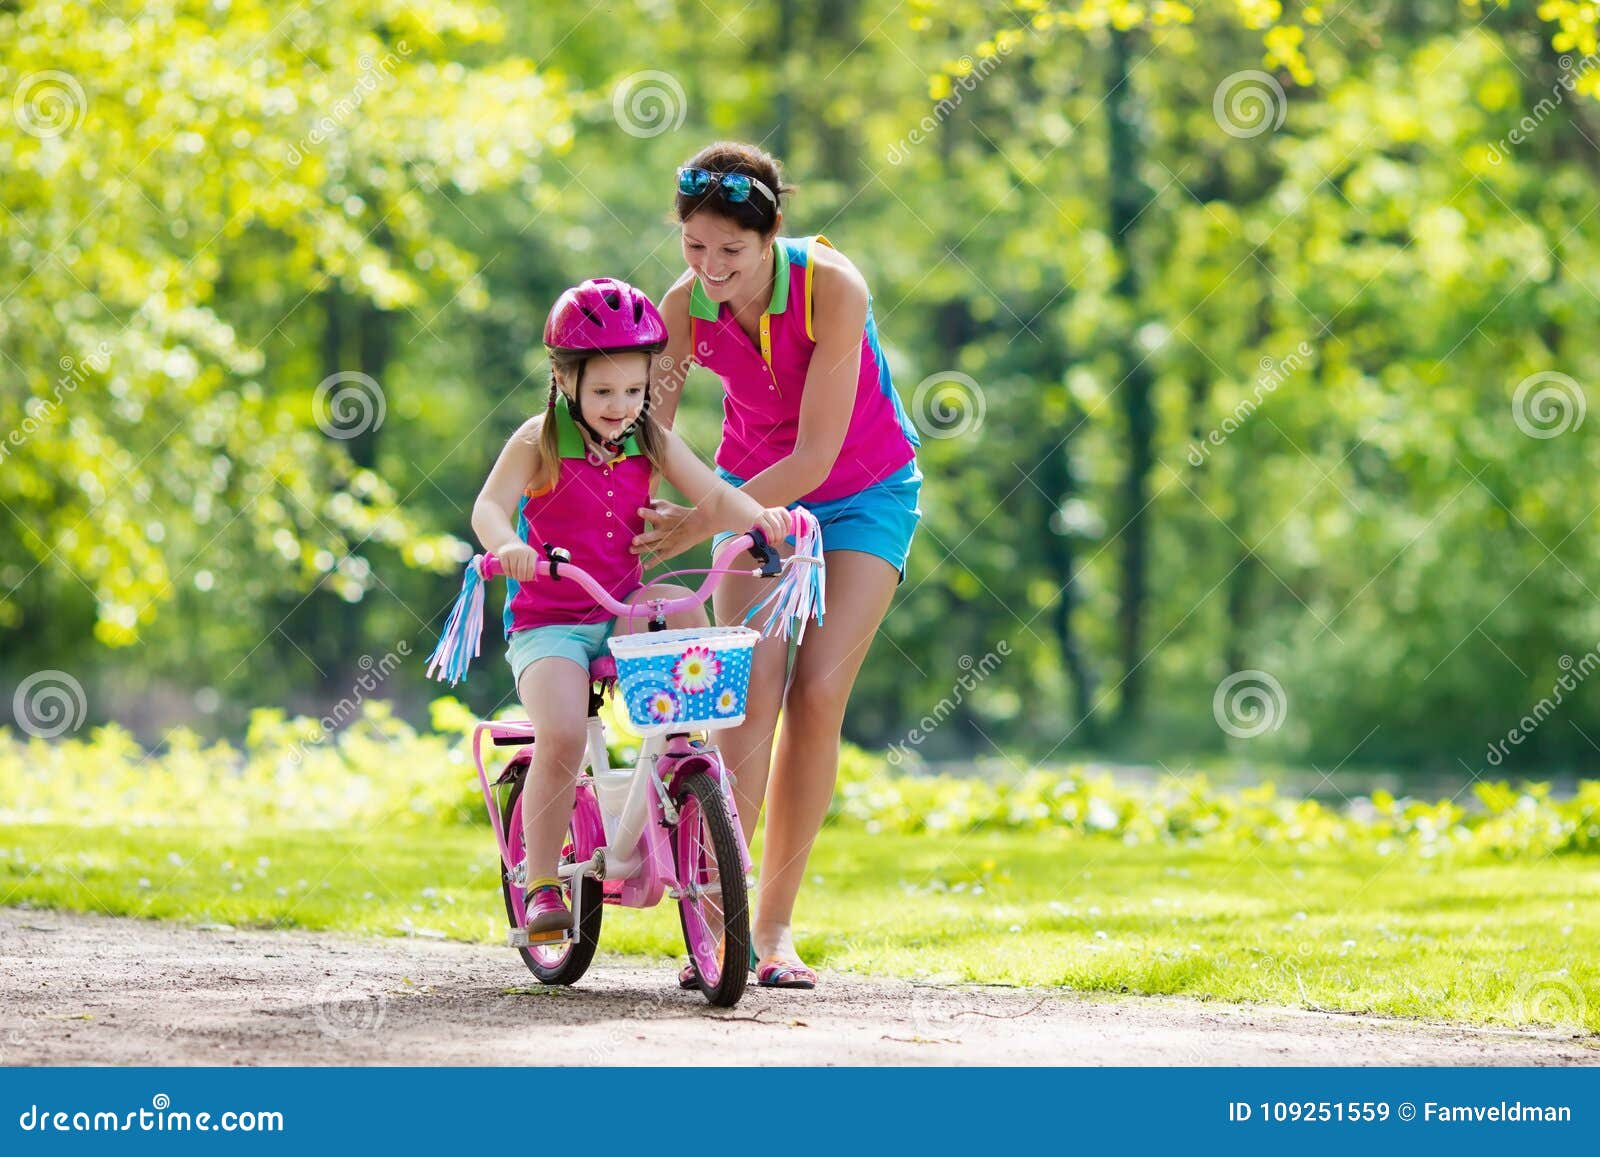 teaching kids to bike